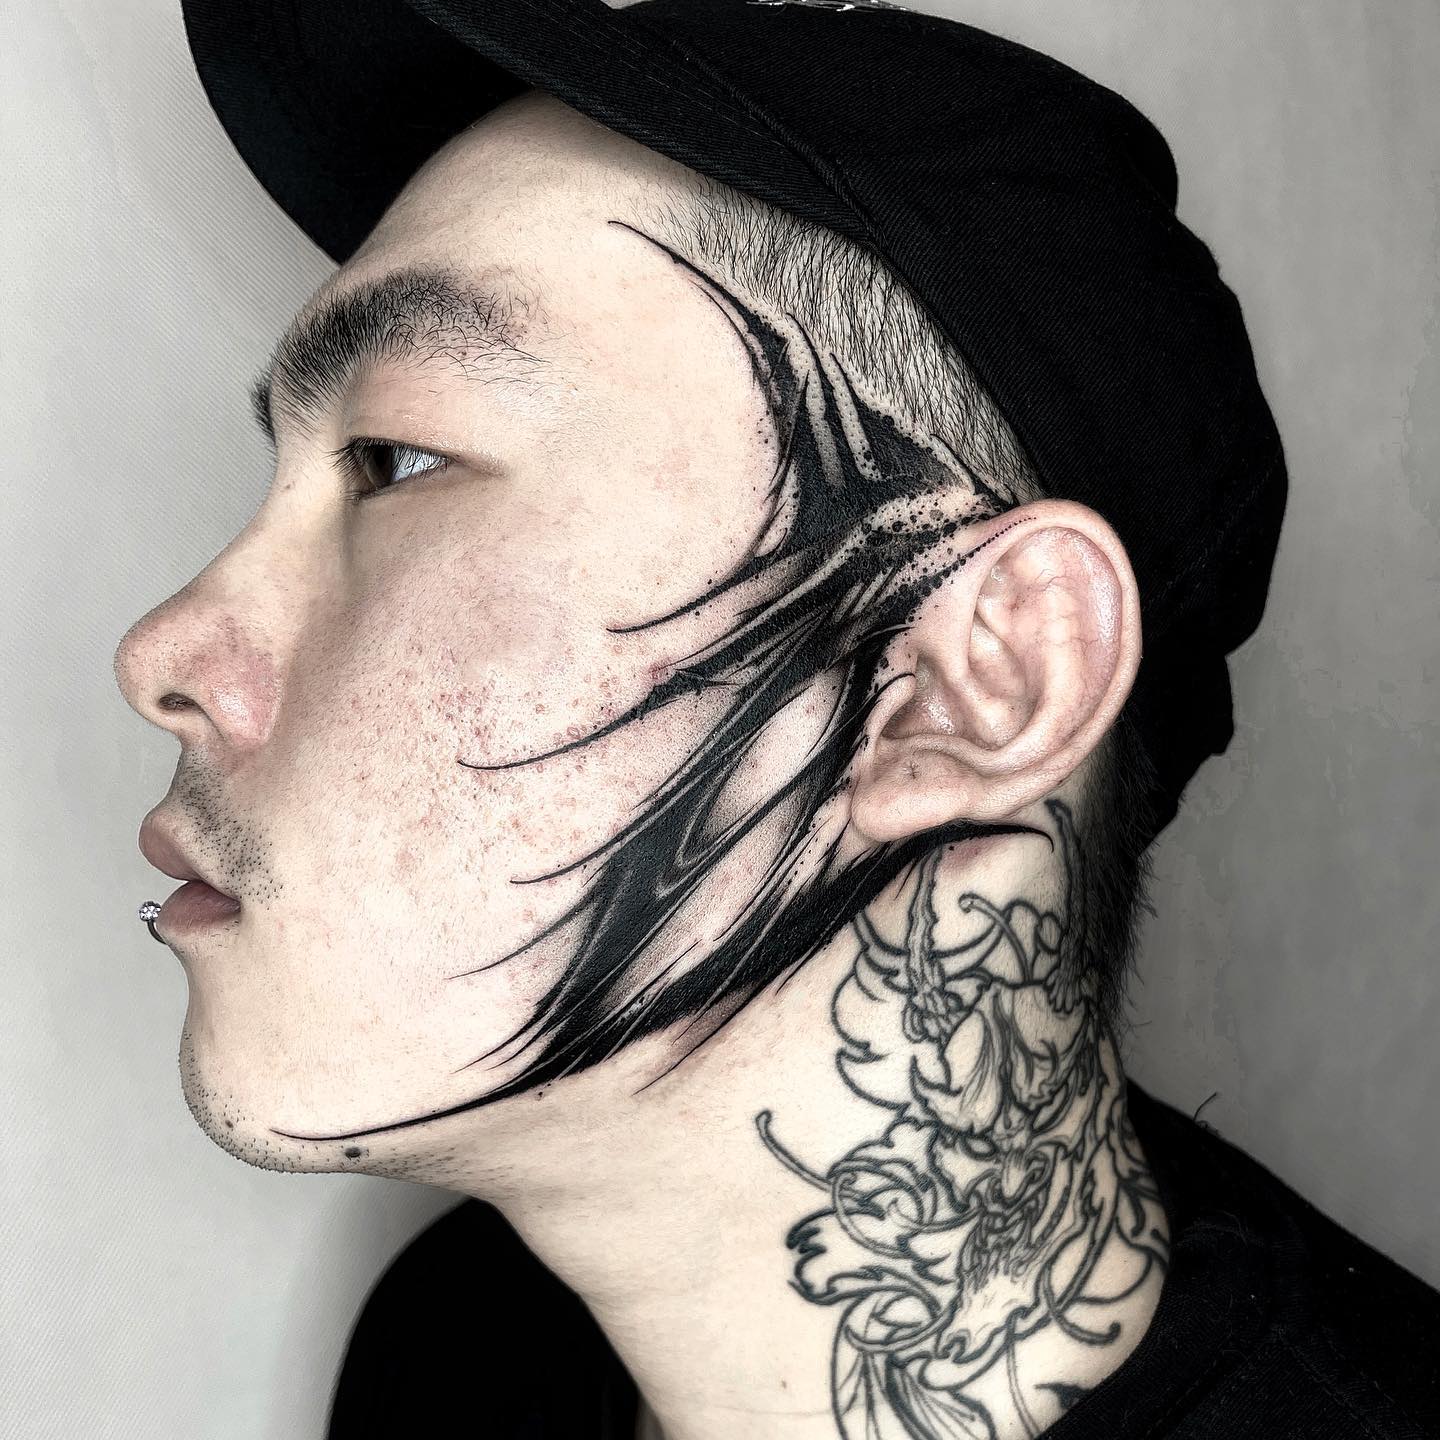 Tatuaje de línea negra en la cara